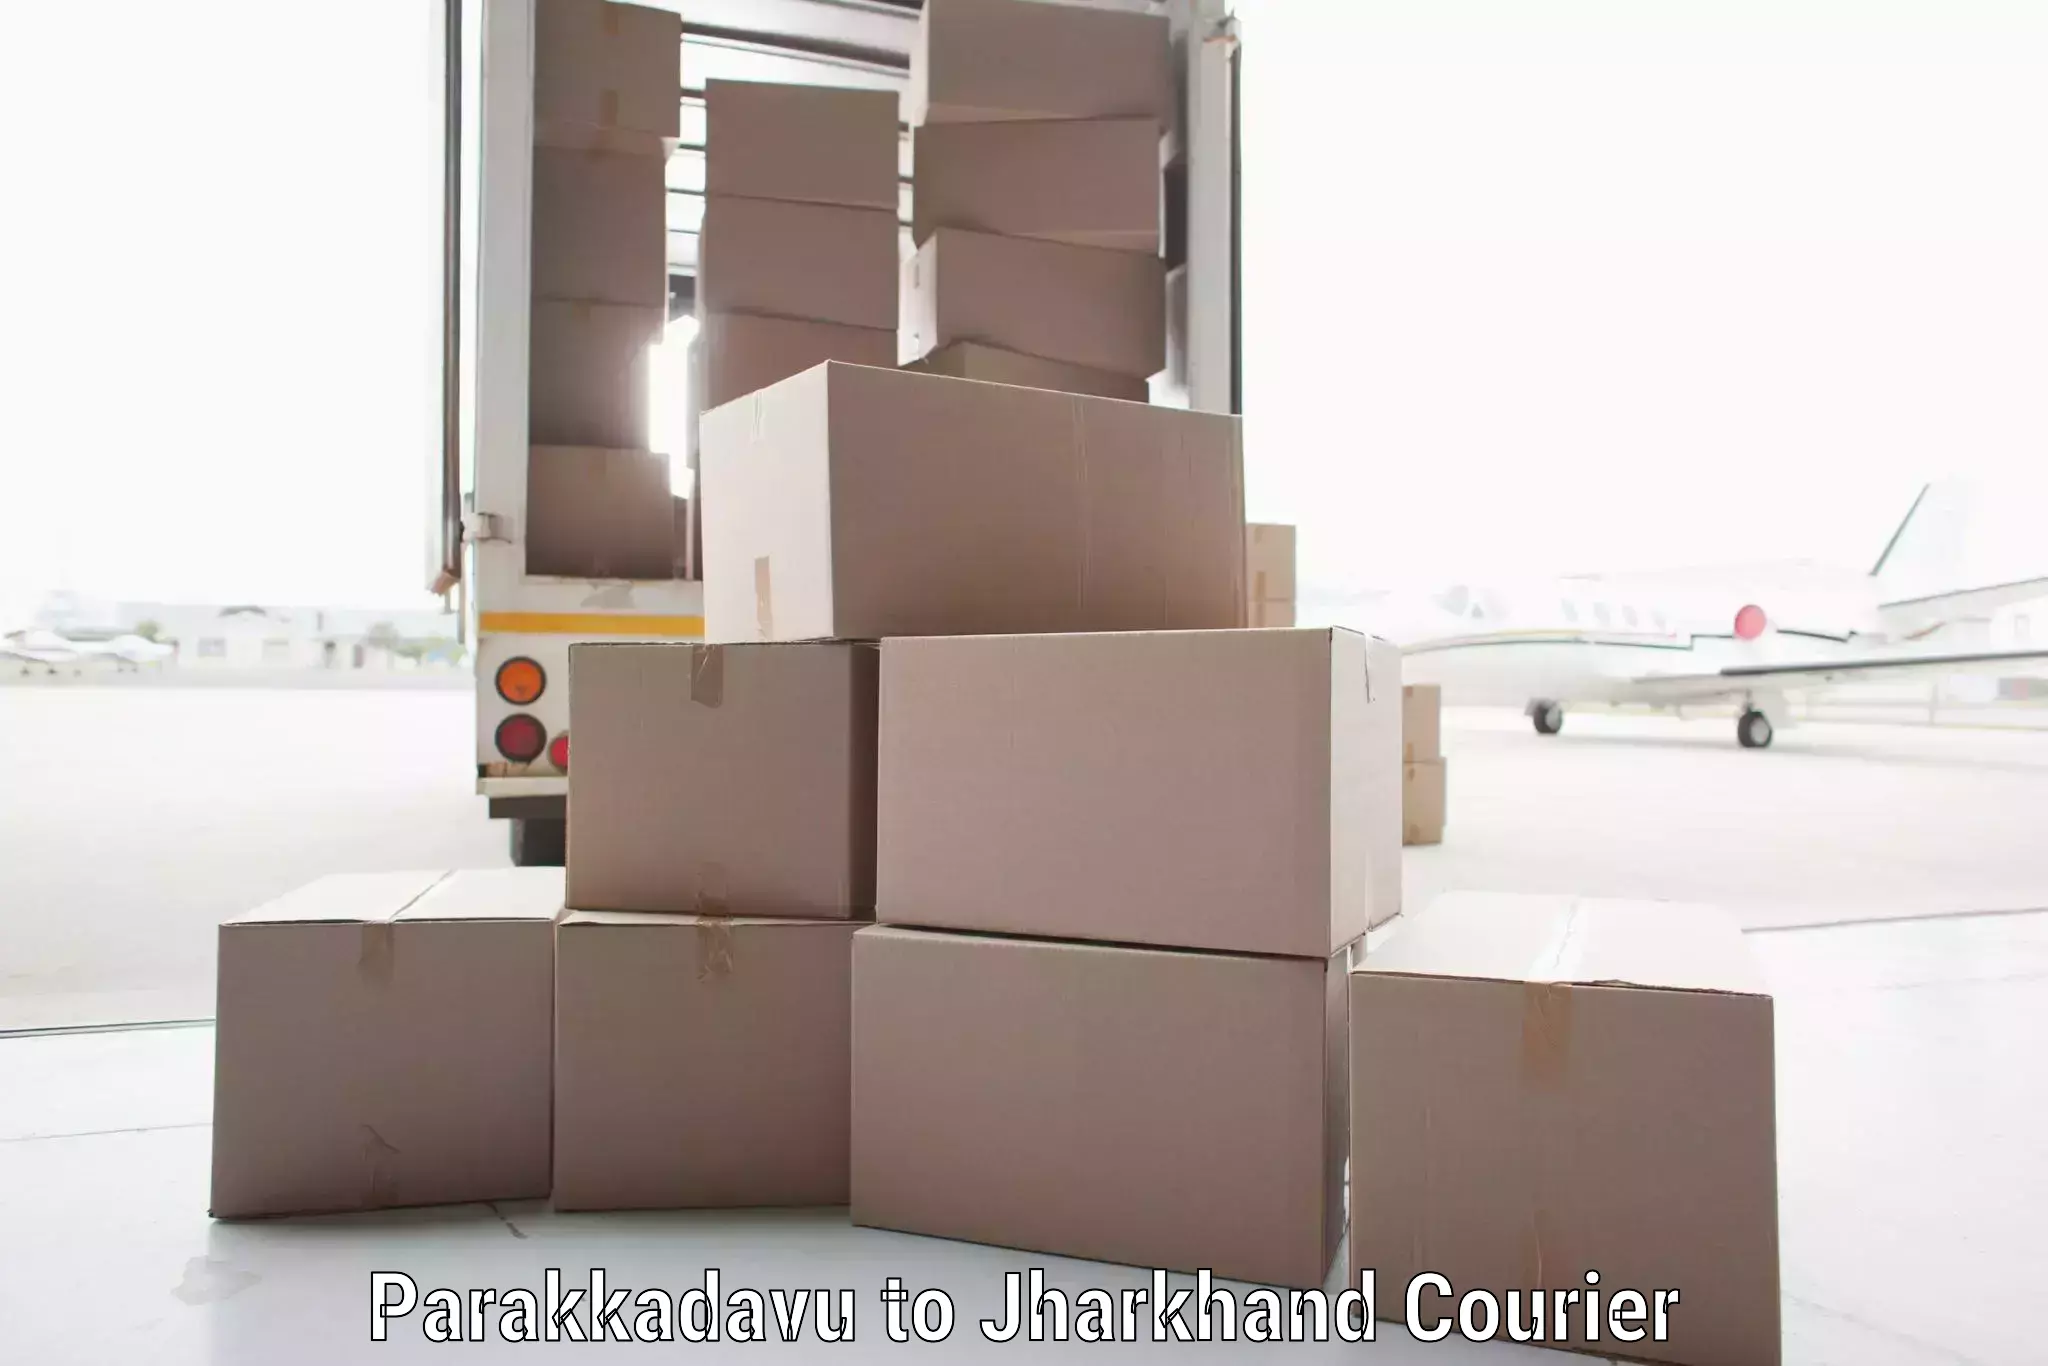 Reliable freight solutions Parakkadavu to Domchanch